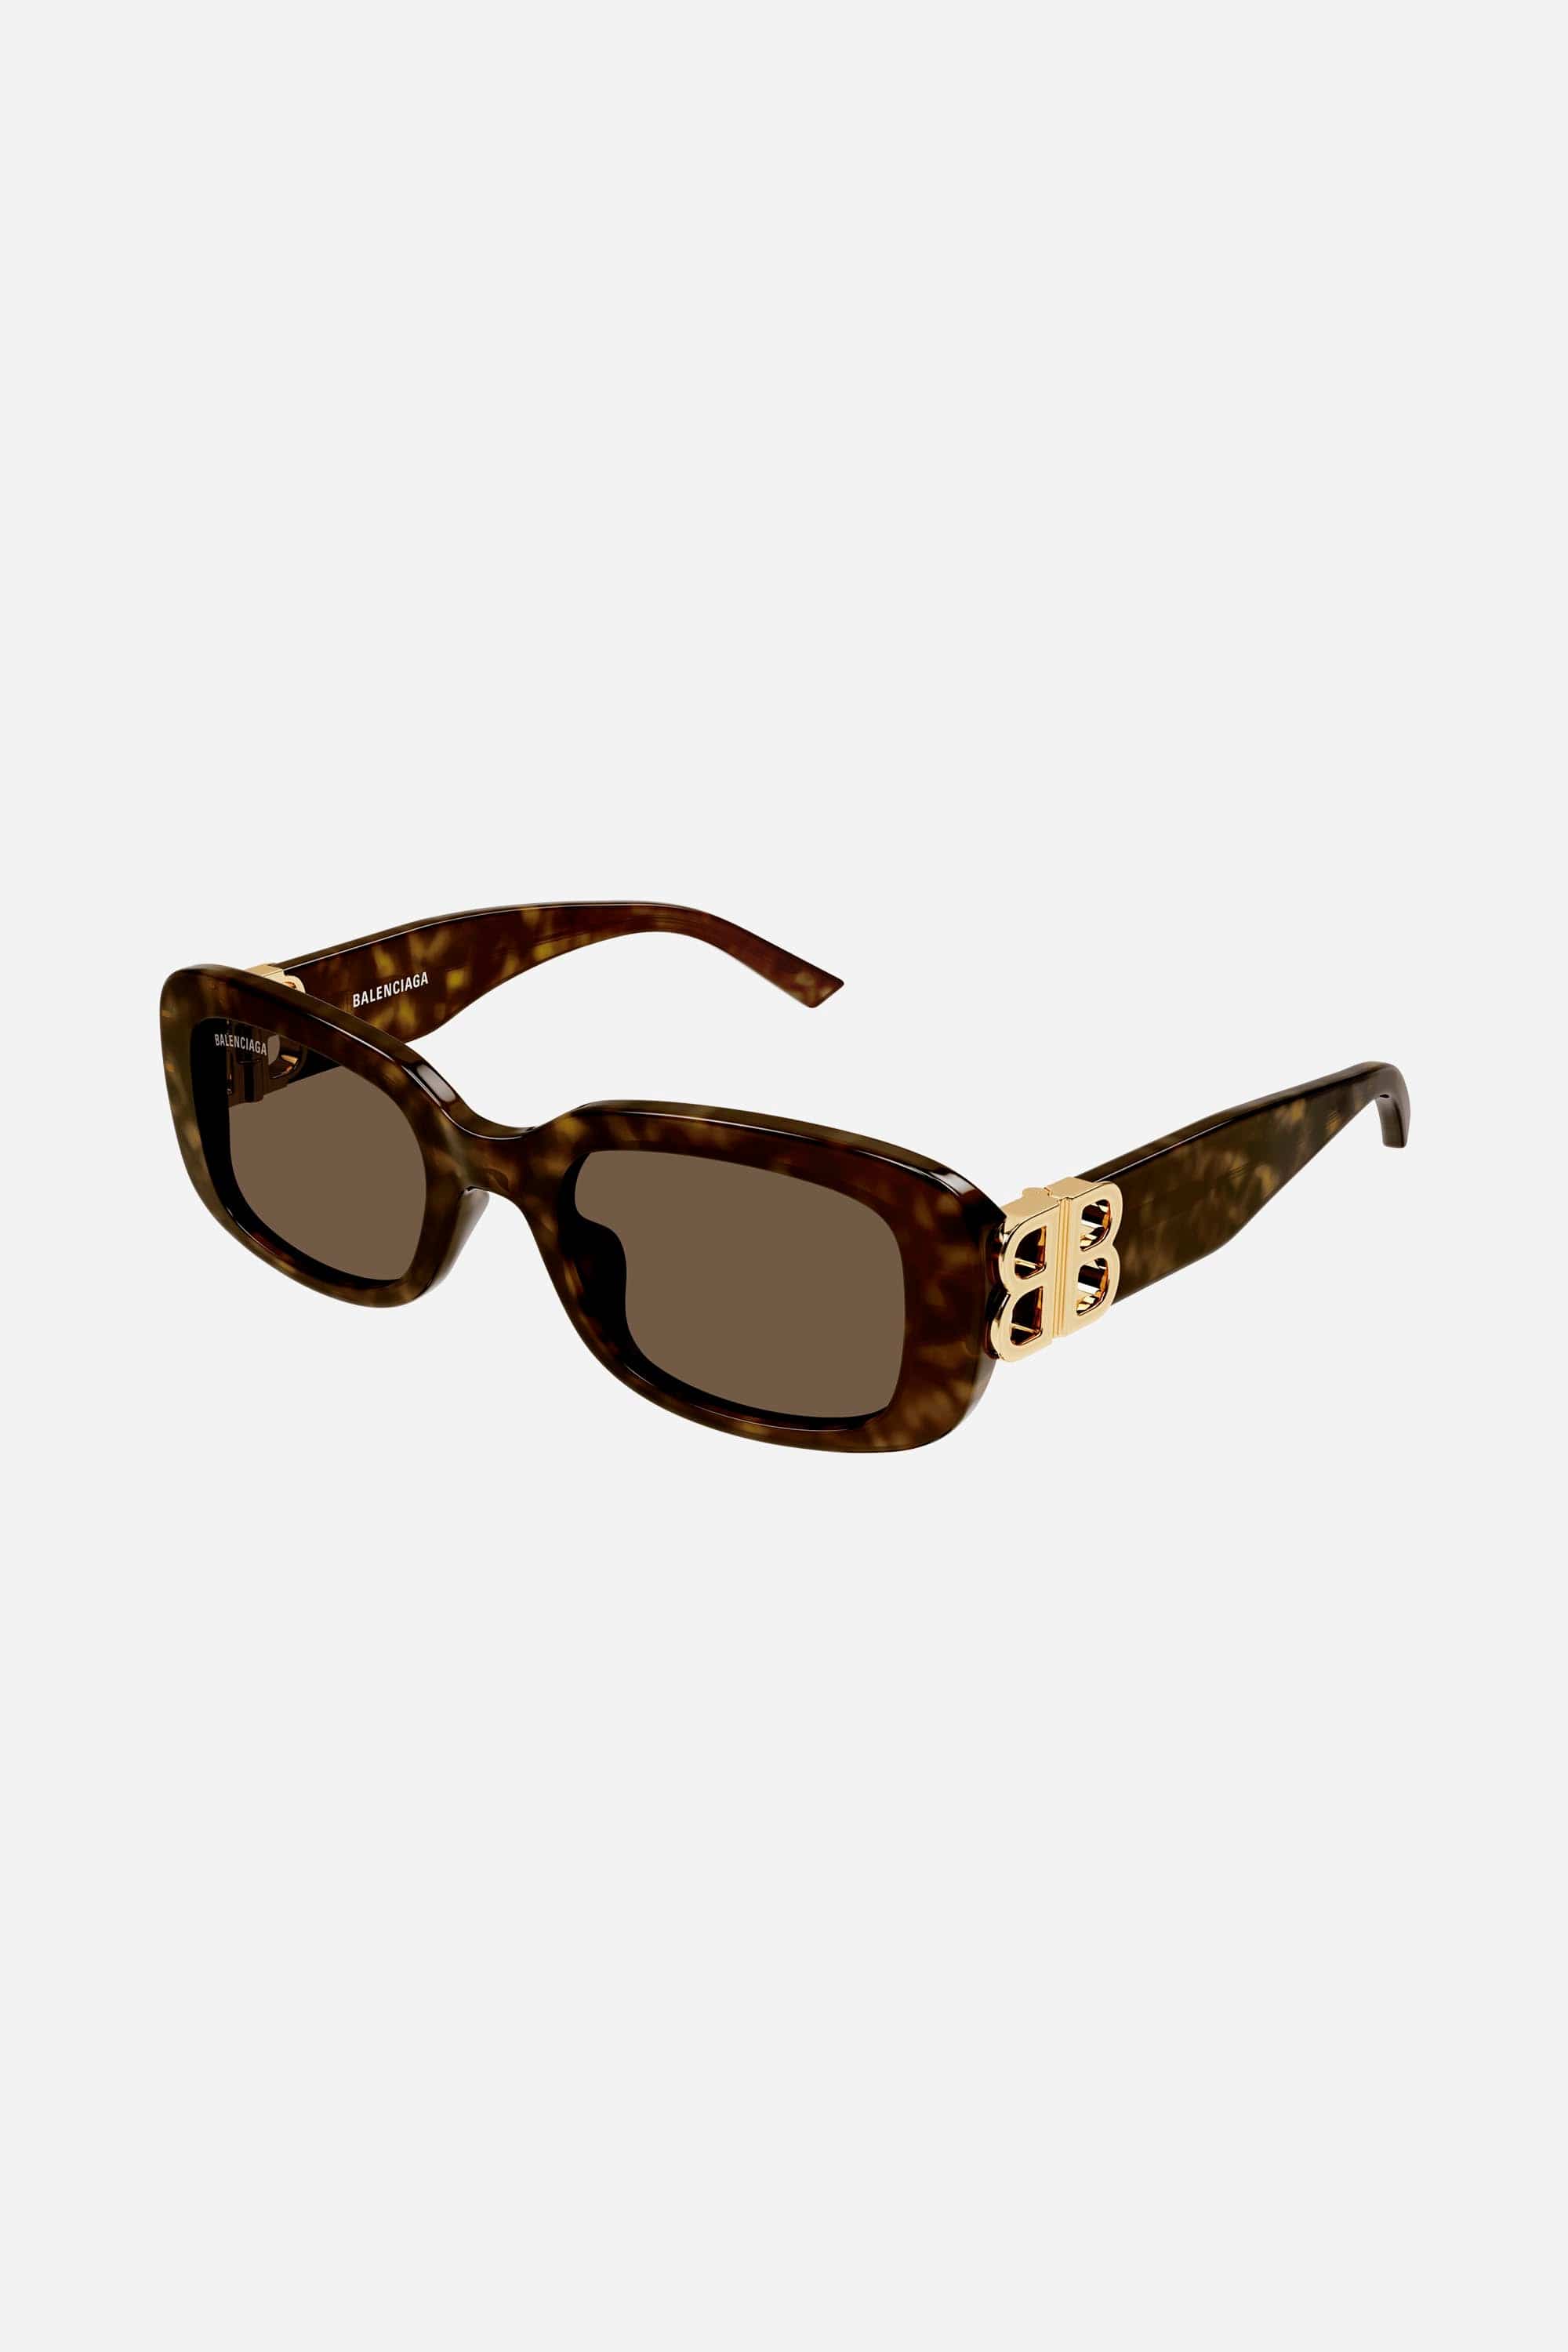 Balenciaga Dynasty havana sunglasses - Eyewear Club